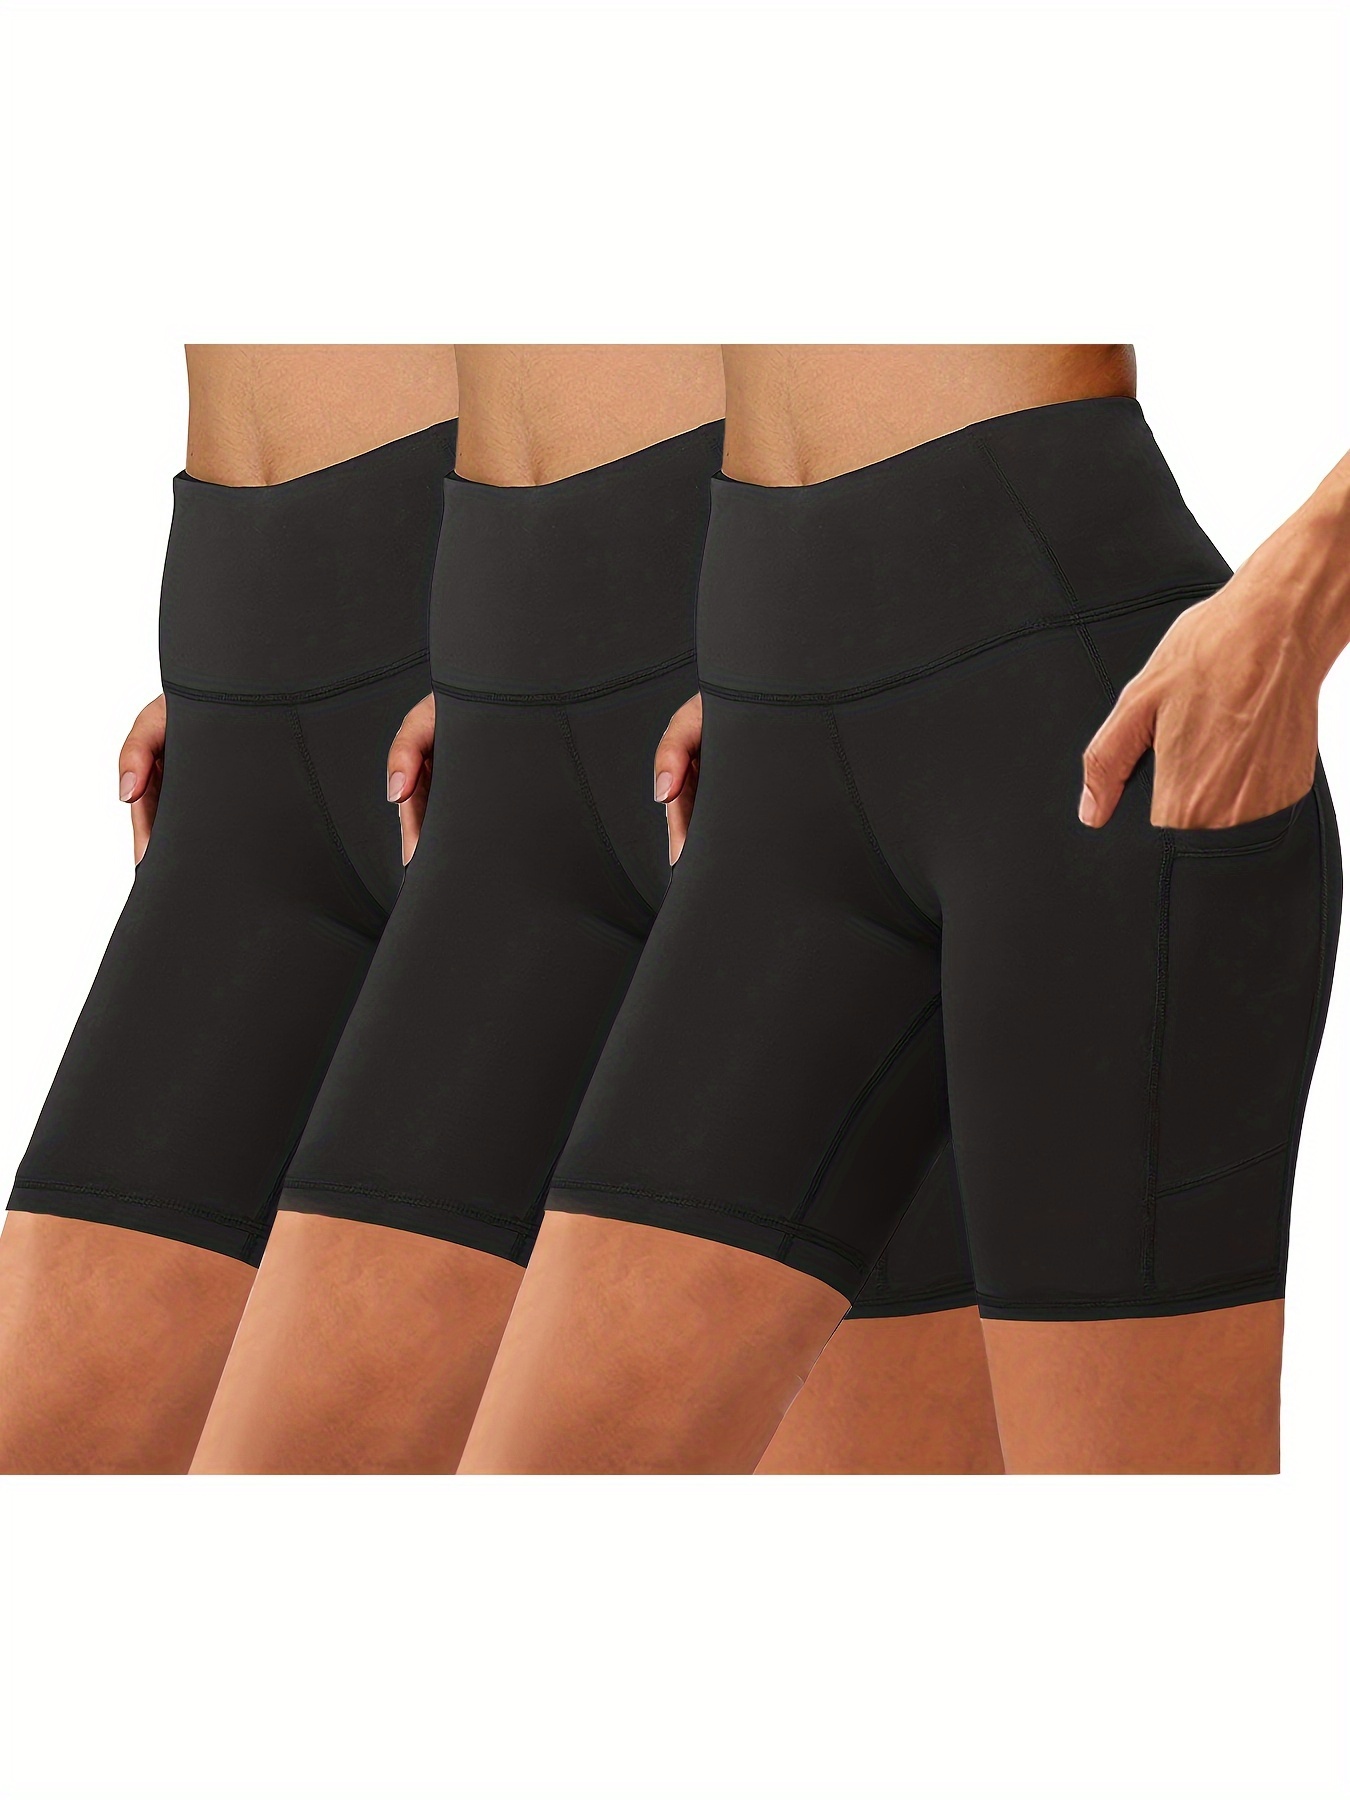 Aayomet Yoga Pants Spandex Shorts Women Drawstring Comfy Mini